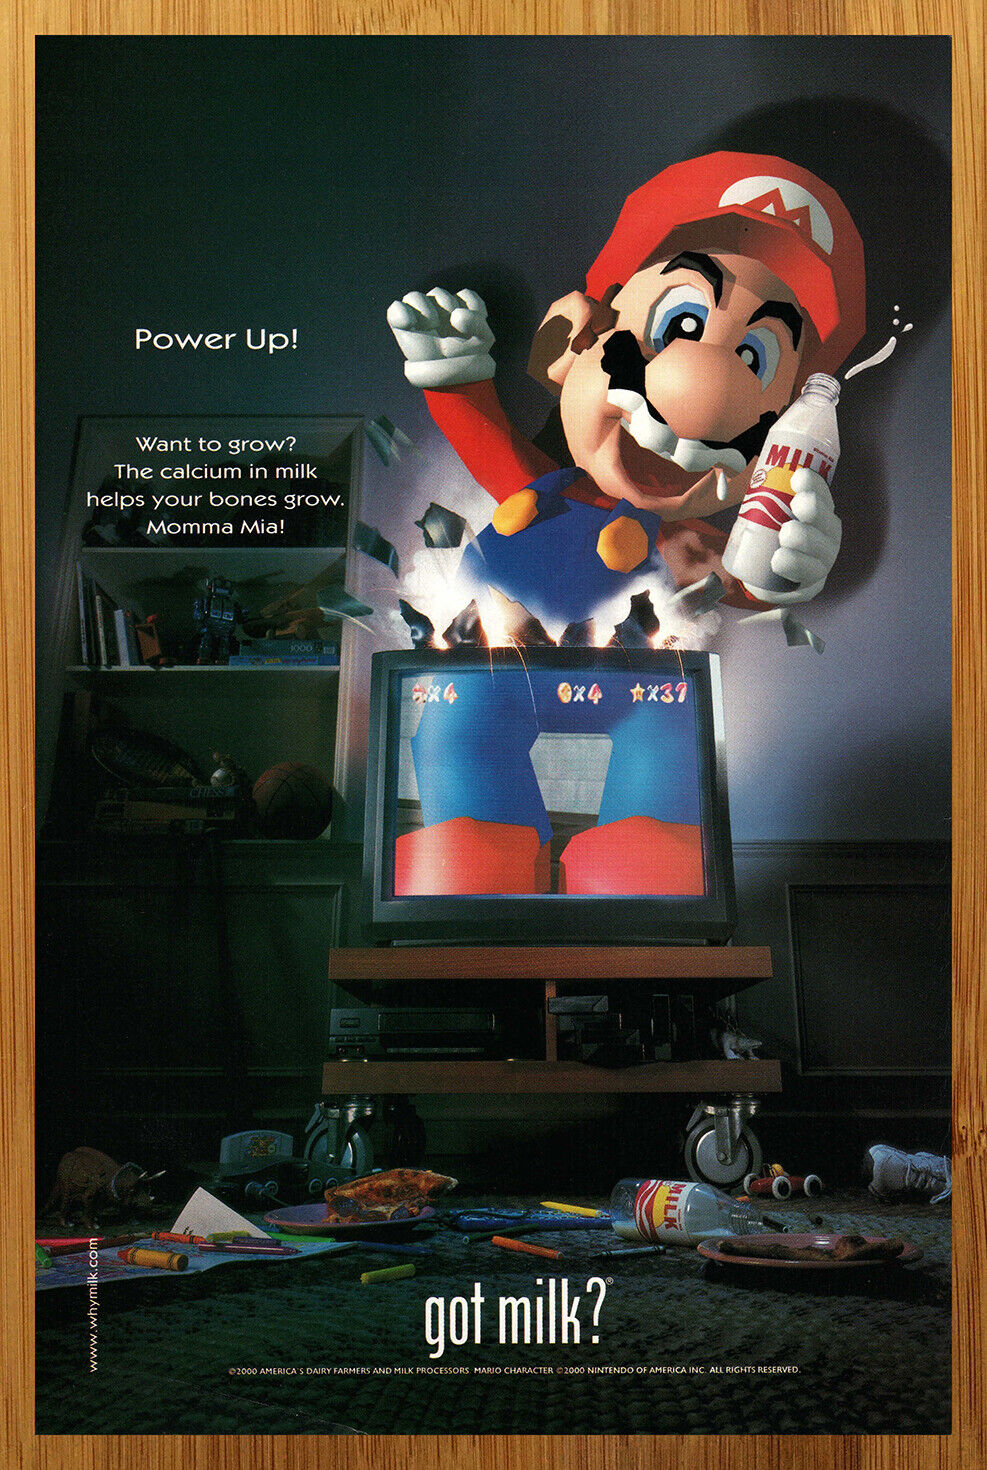 2000 Super Mario 64 GOT MILK? Vintage Print Ad/Poster N64 Nintendo 64 Promo Art